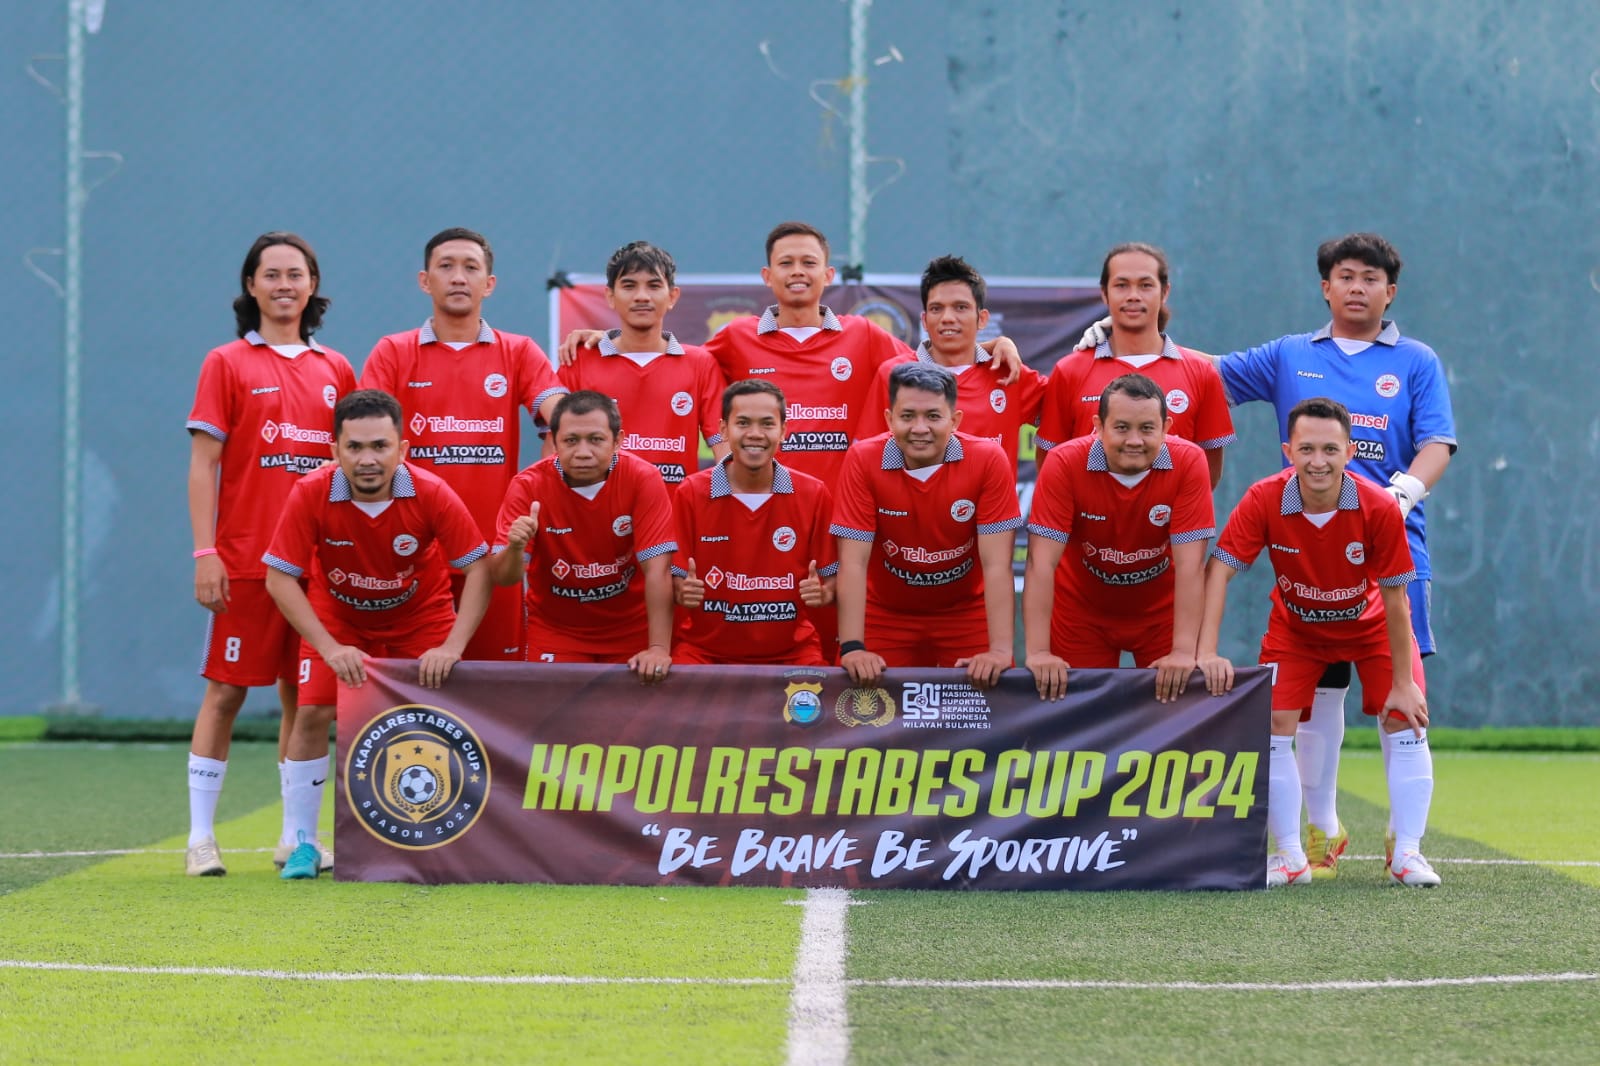 Raih Dua Kemenangan, Media FC Lolos ke Semi Final Turnamen Mini Soccer Kapolrestabes Cup 2024